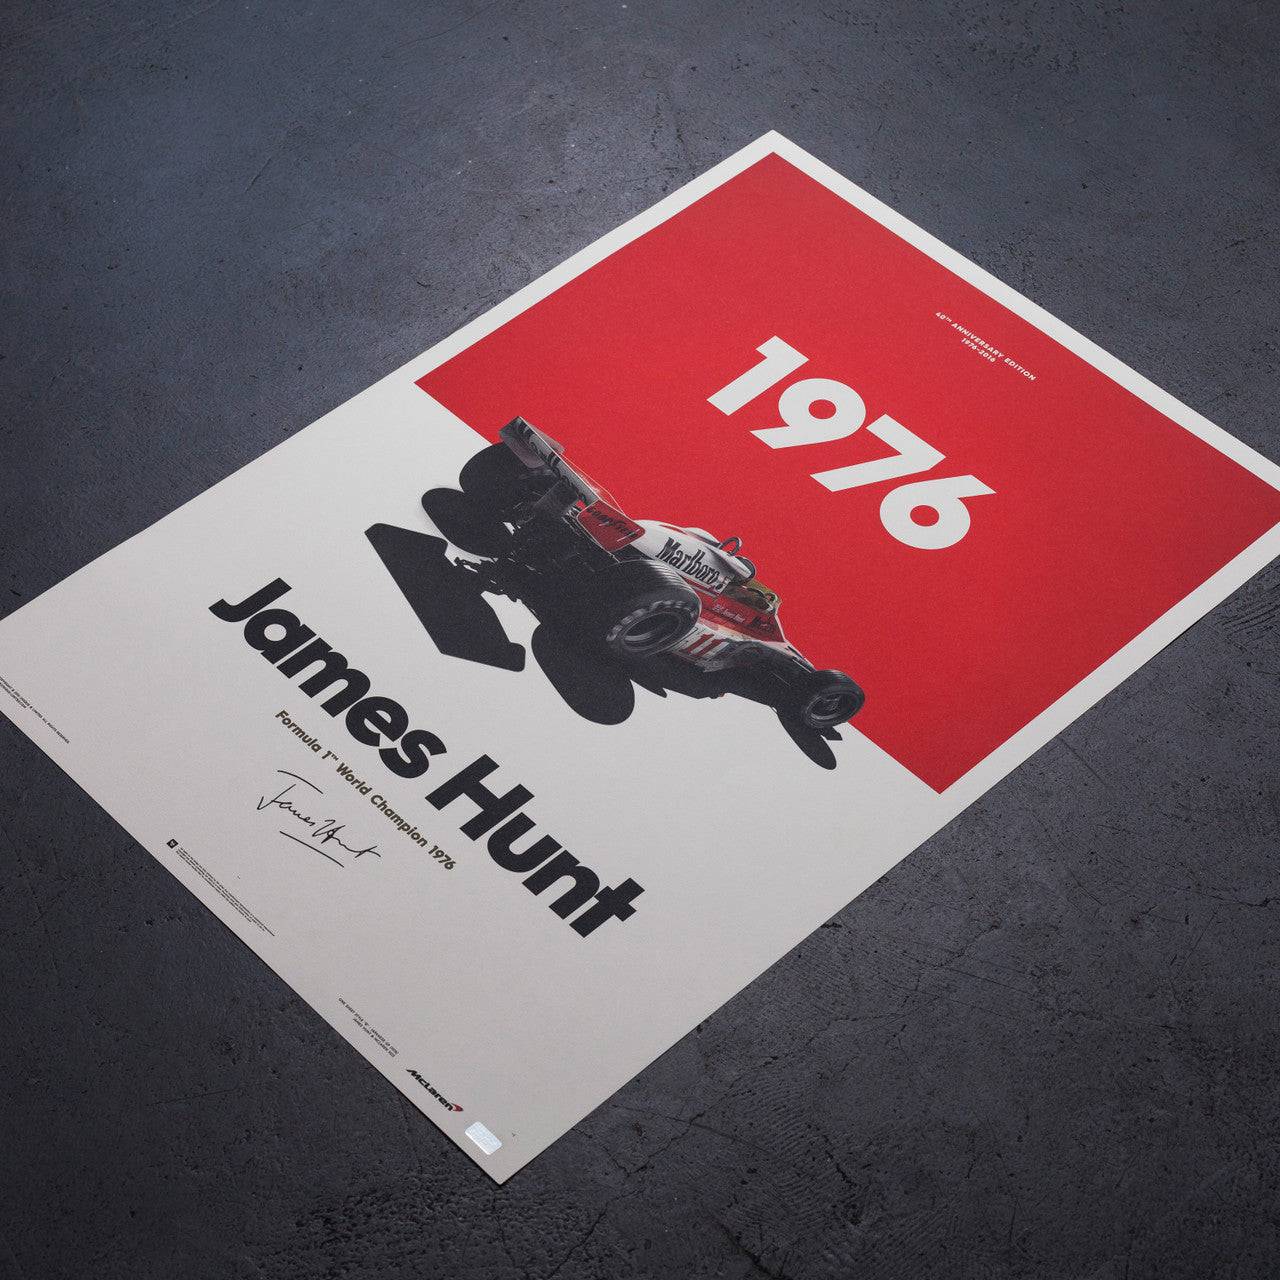 McLaren M23 - James Hunt - Marlboro - Japanese GP - 1976 - Limited Poster